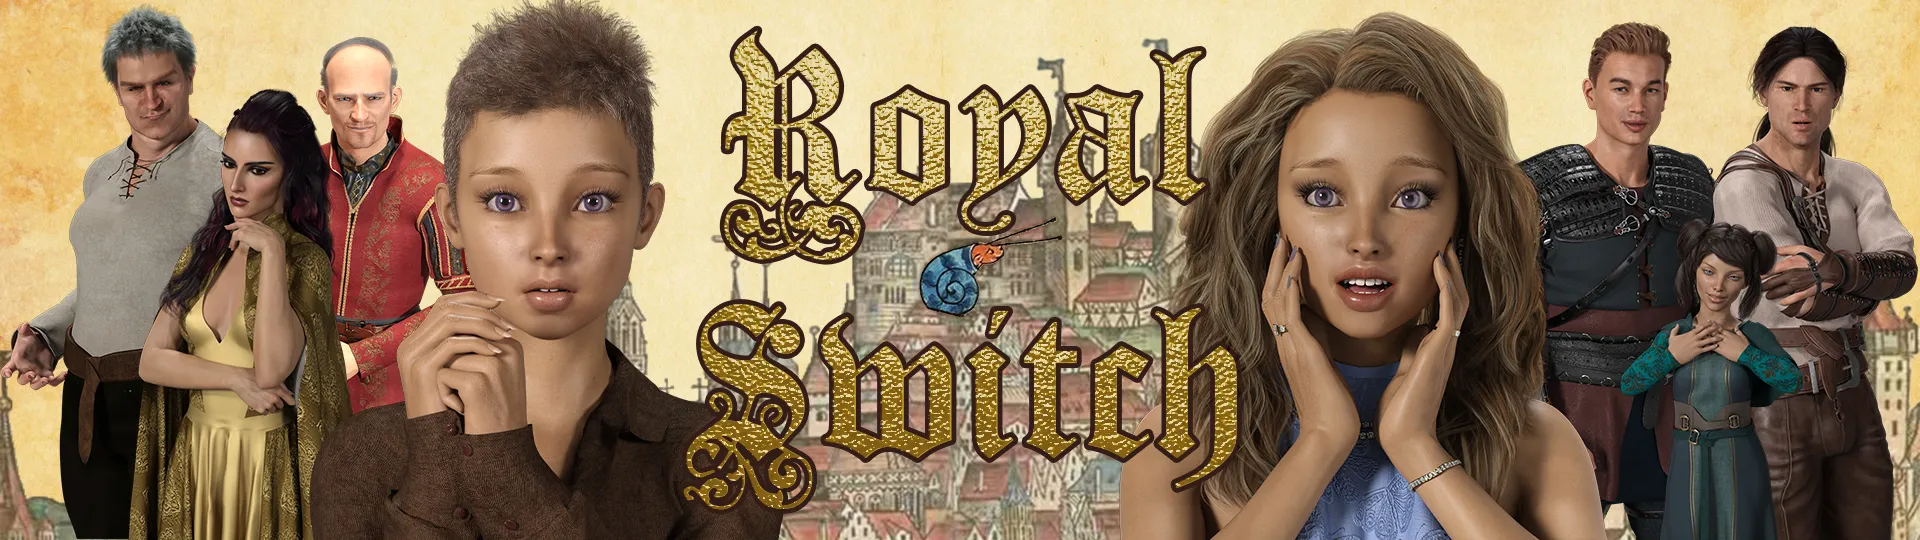 Royal Switch v0.06 HG1000053 main